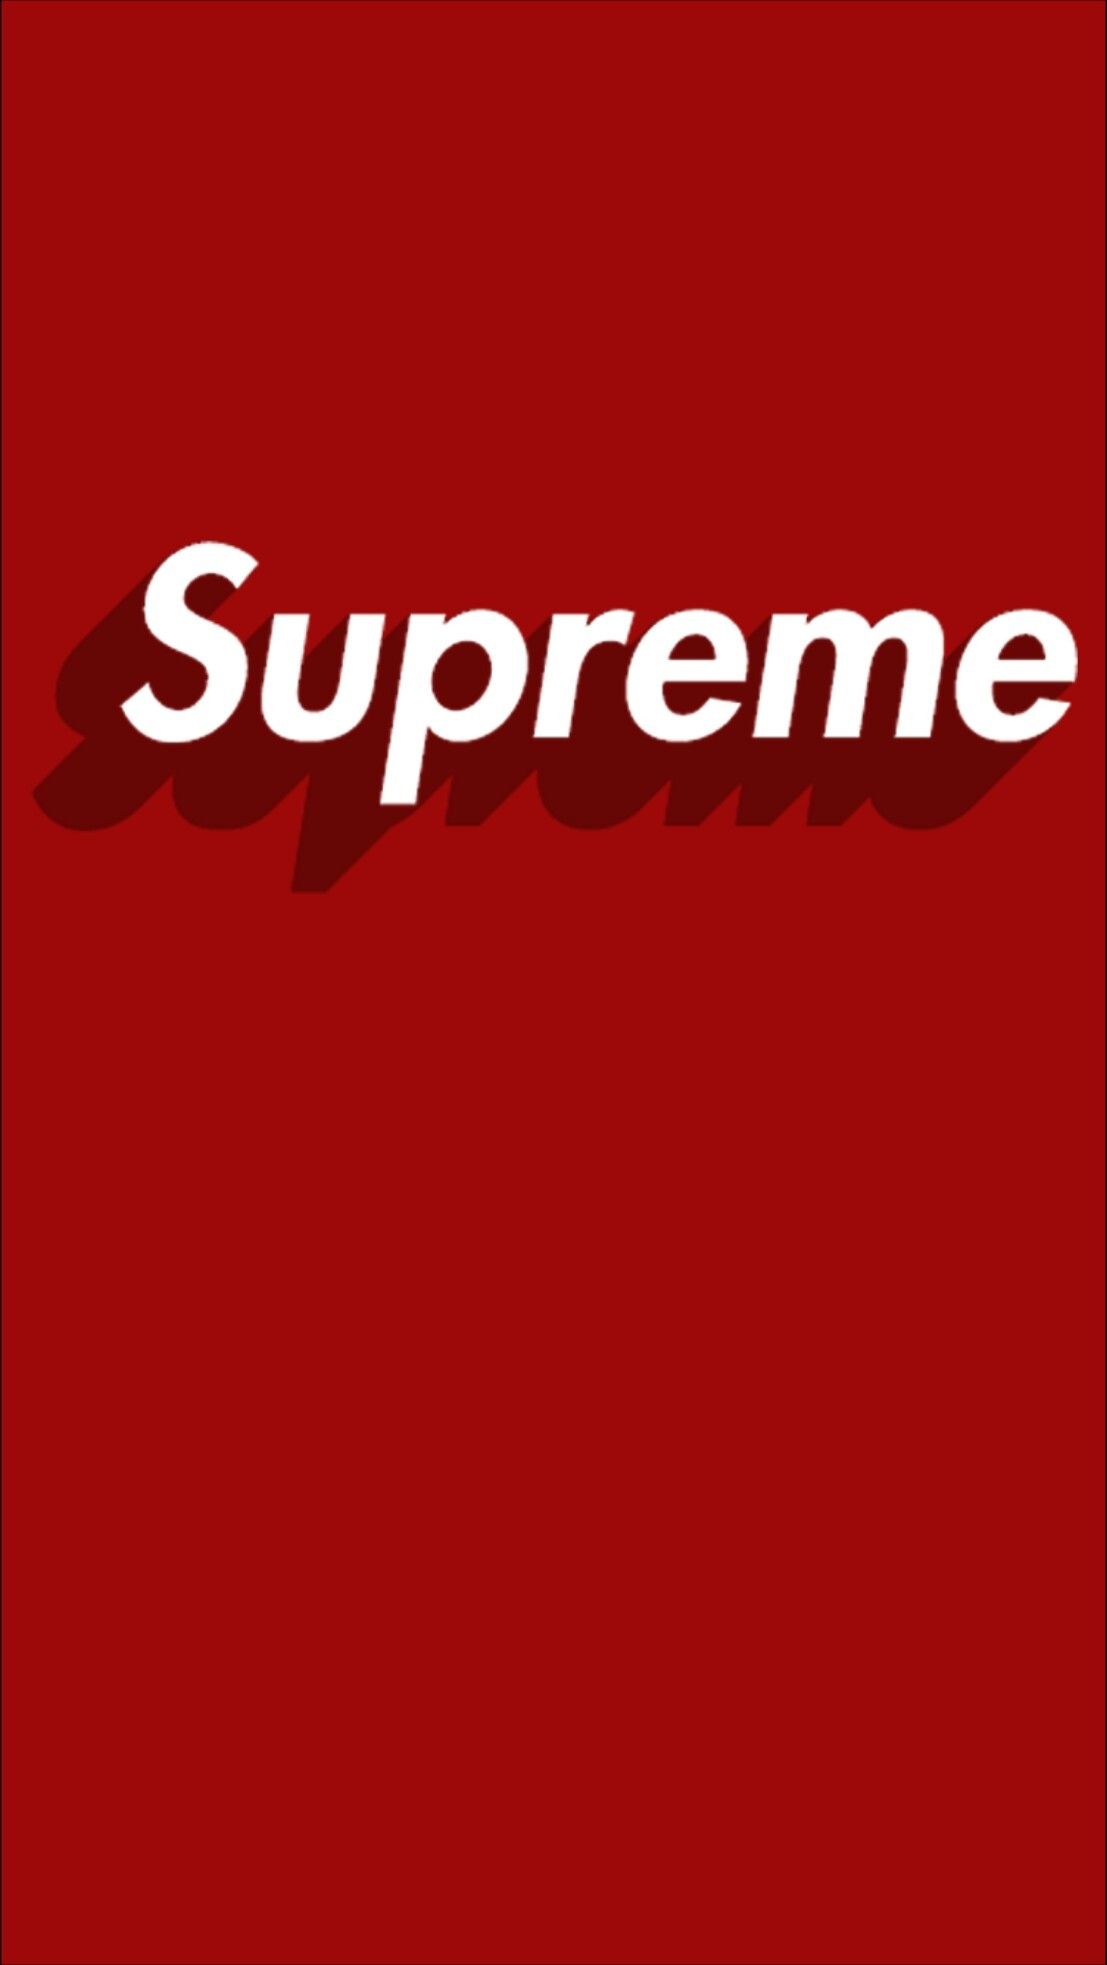 Supreme iPhone X Wallpapers   Top Free Supreme iPhone X